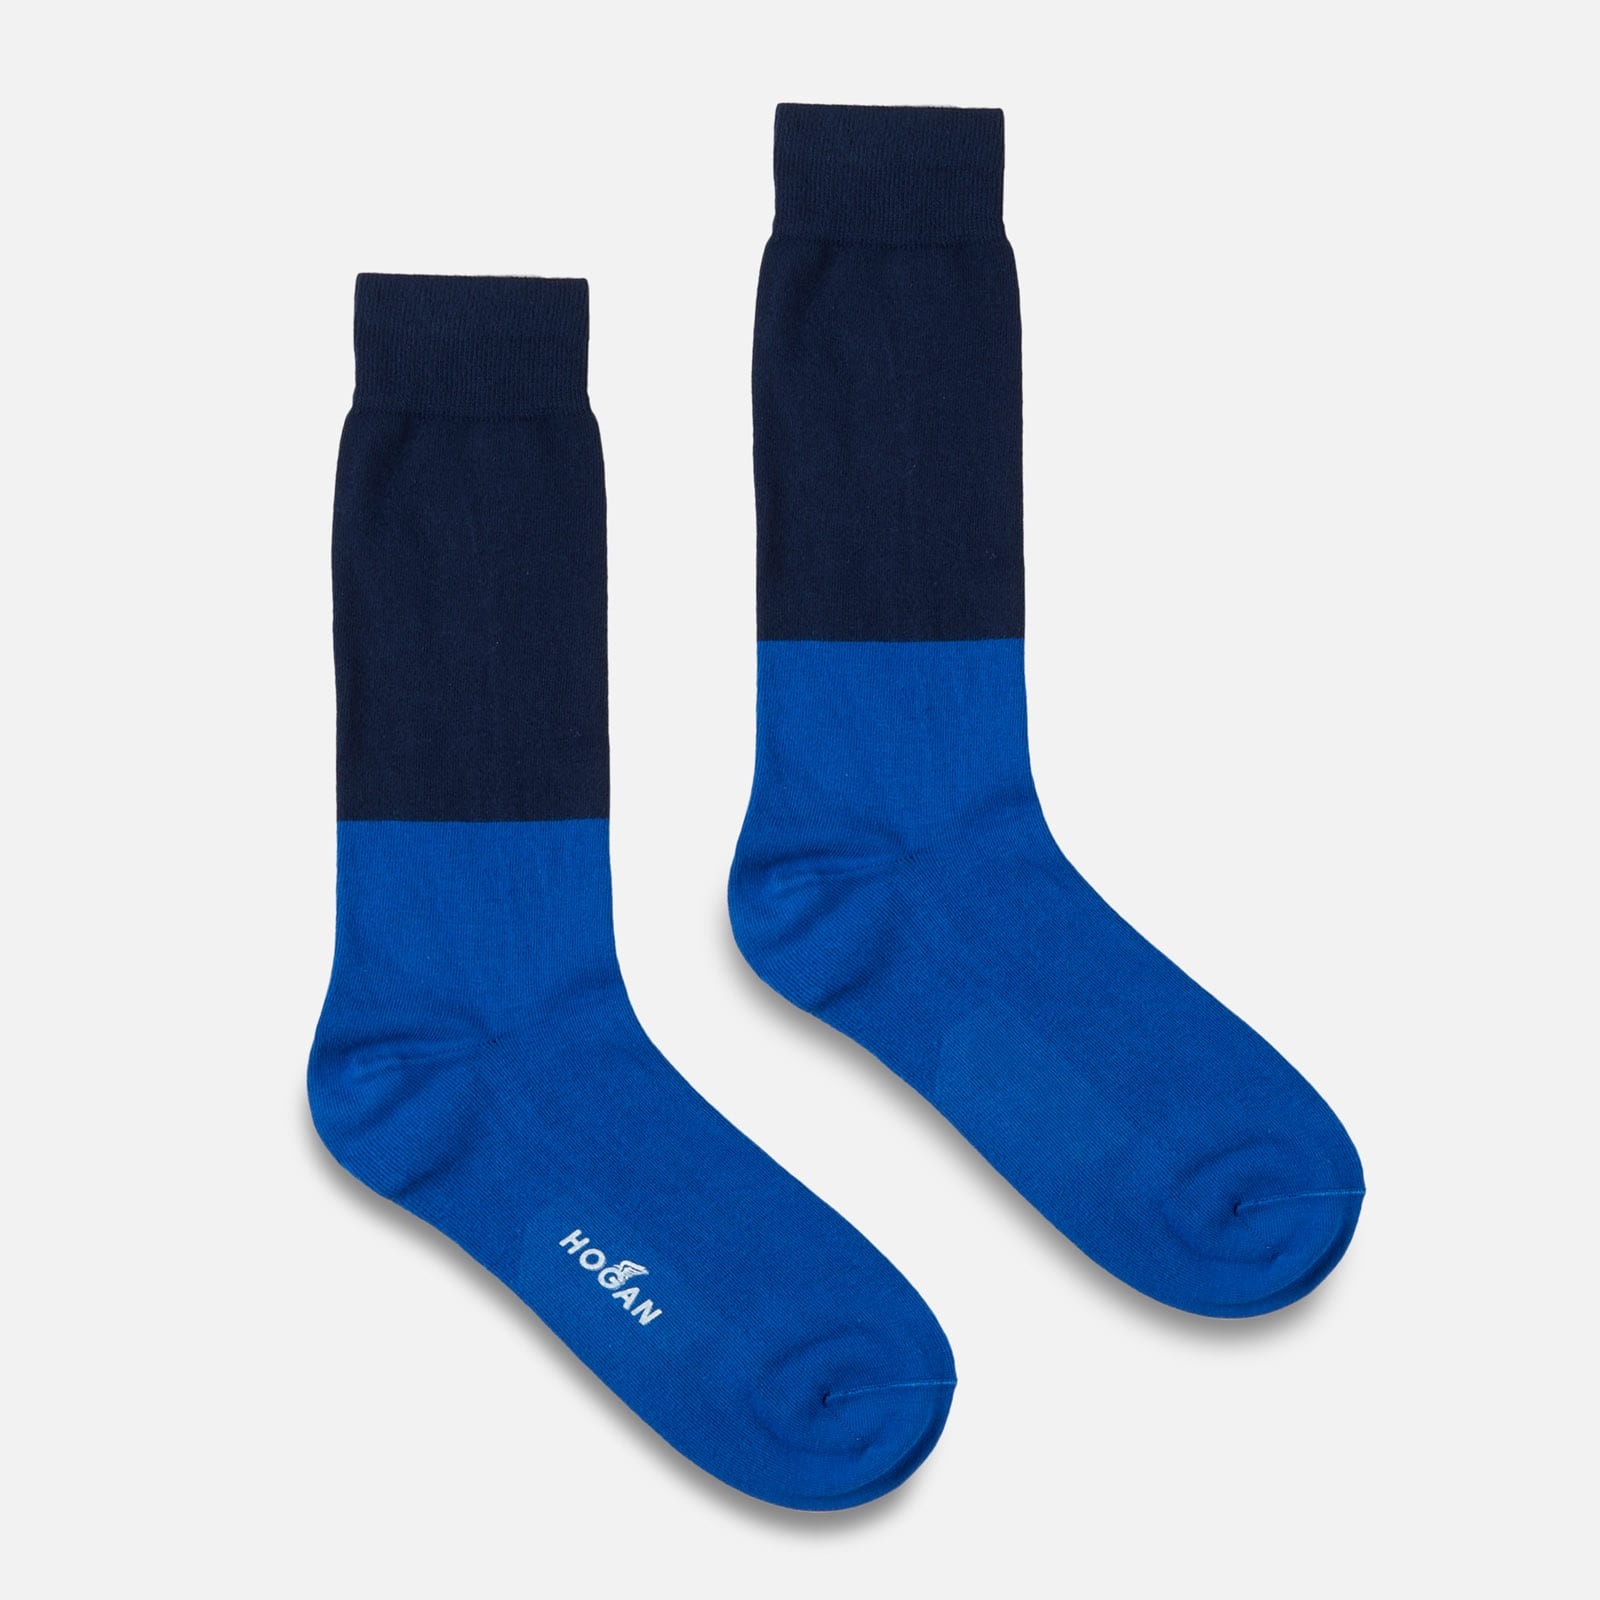 Socks Blue Black - 1